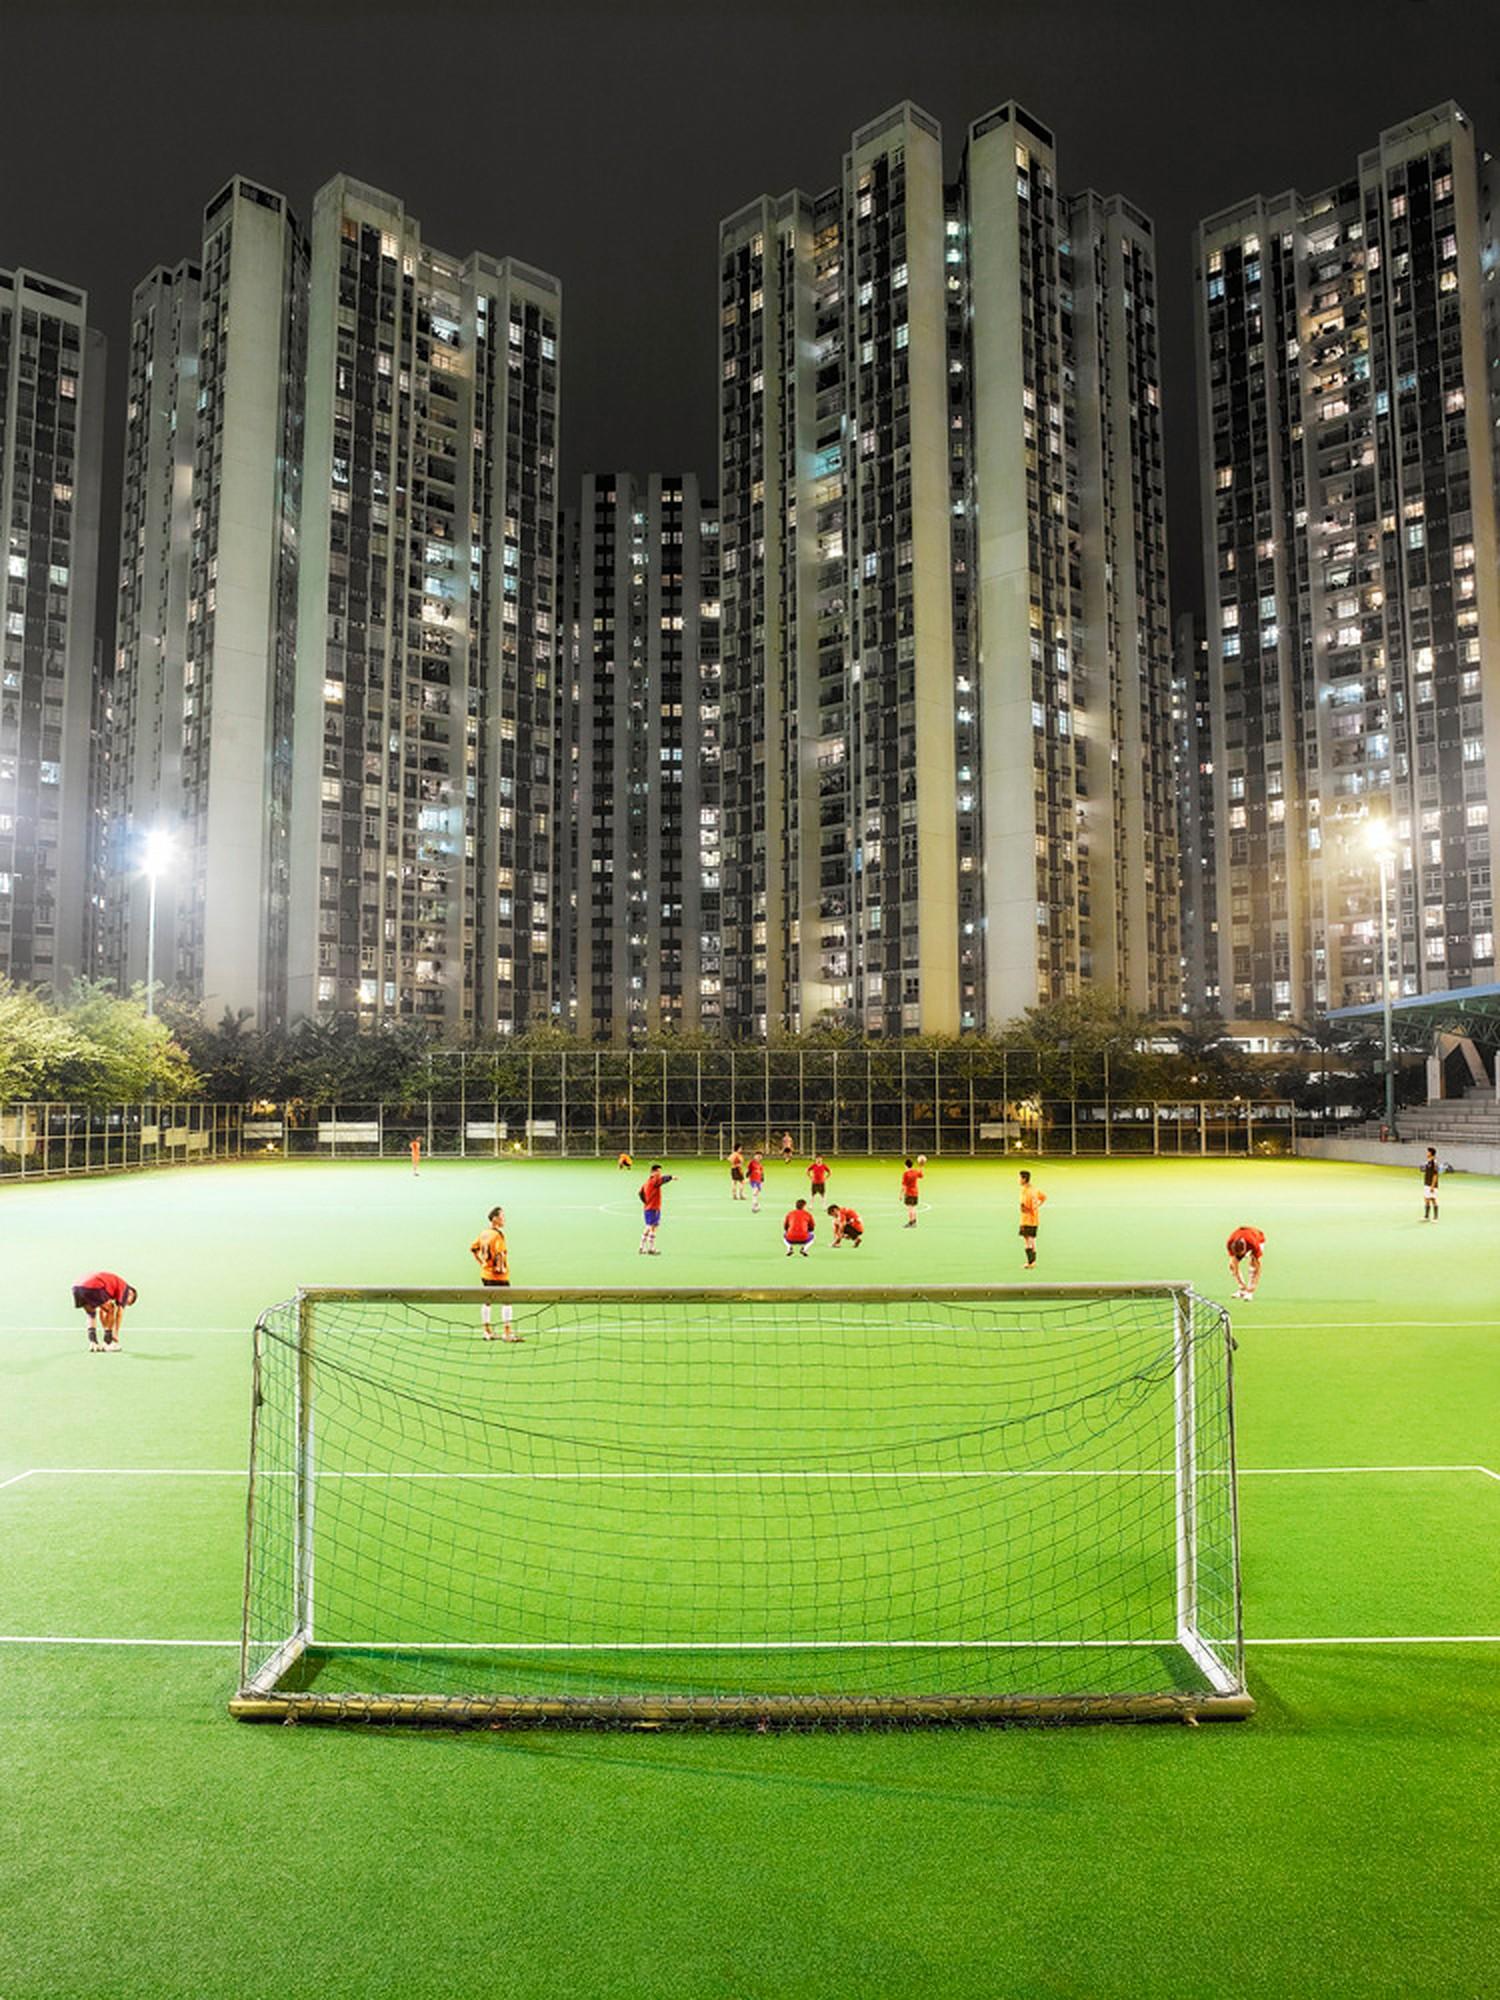 Hong Kong Football - Chris Frazer Smith, Sports, Portrait, Cityscape, Nighttime